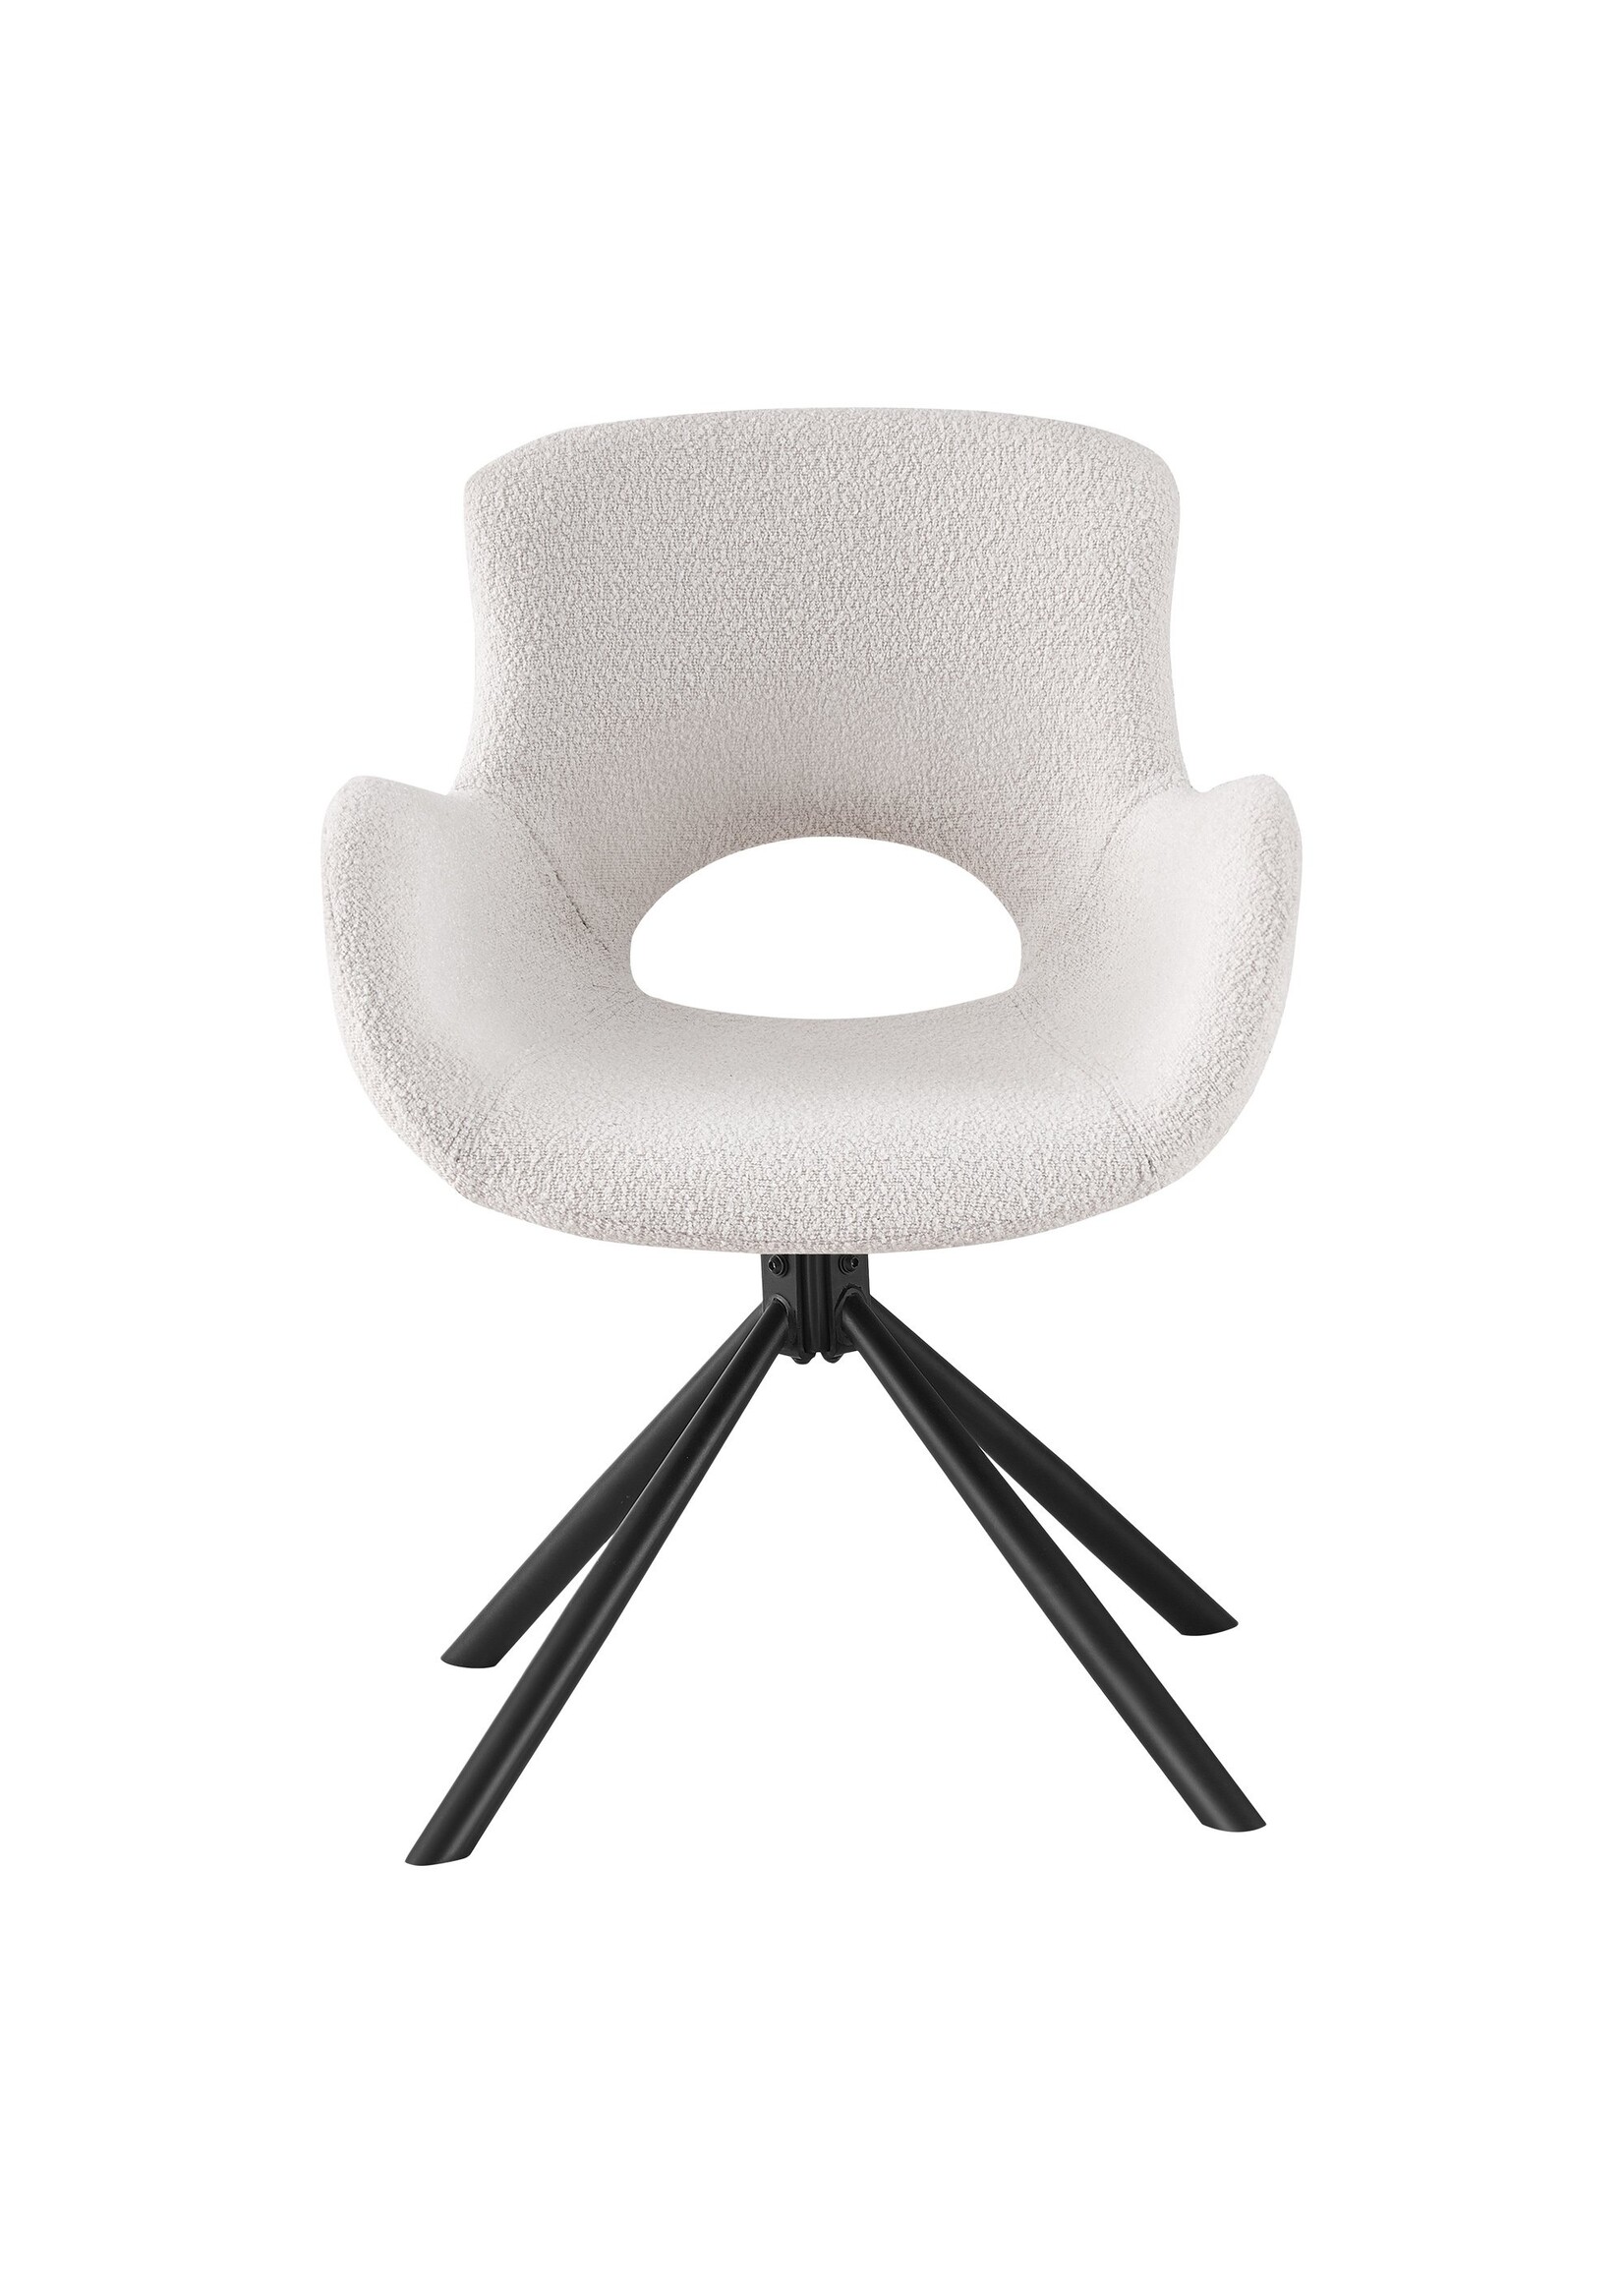 House Nordic Amorim Dining Chair - Eetkamerstoel, in bouclé off-white met draaifunctie - set van 2